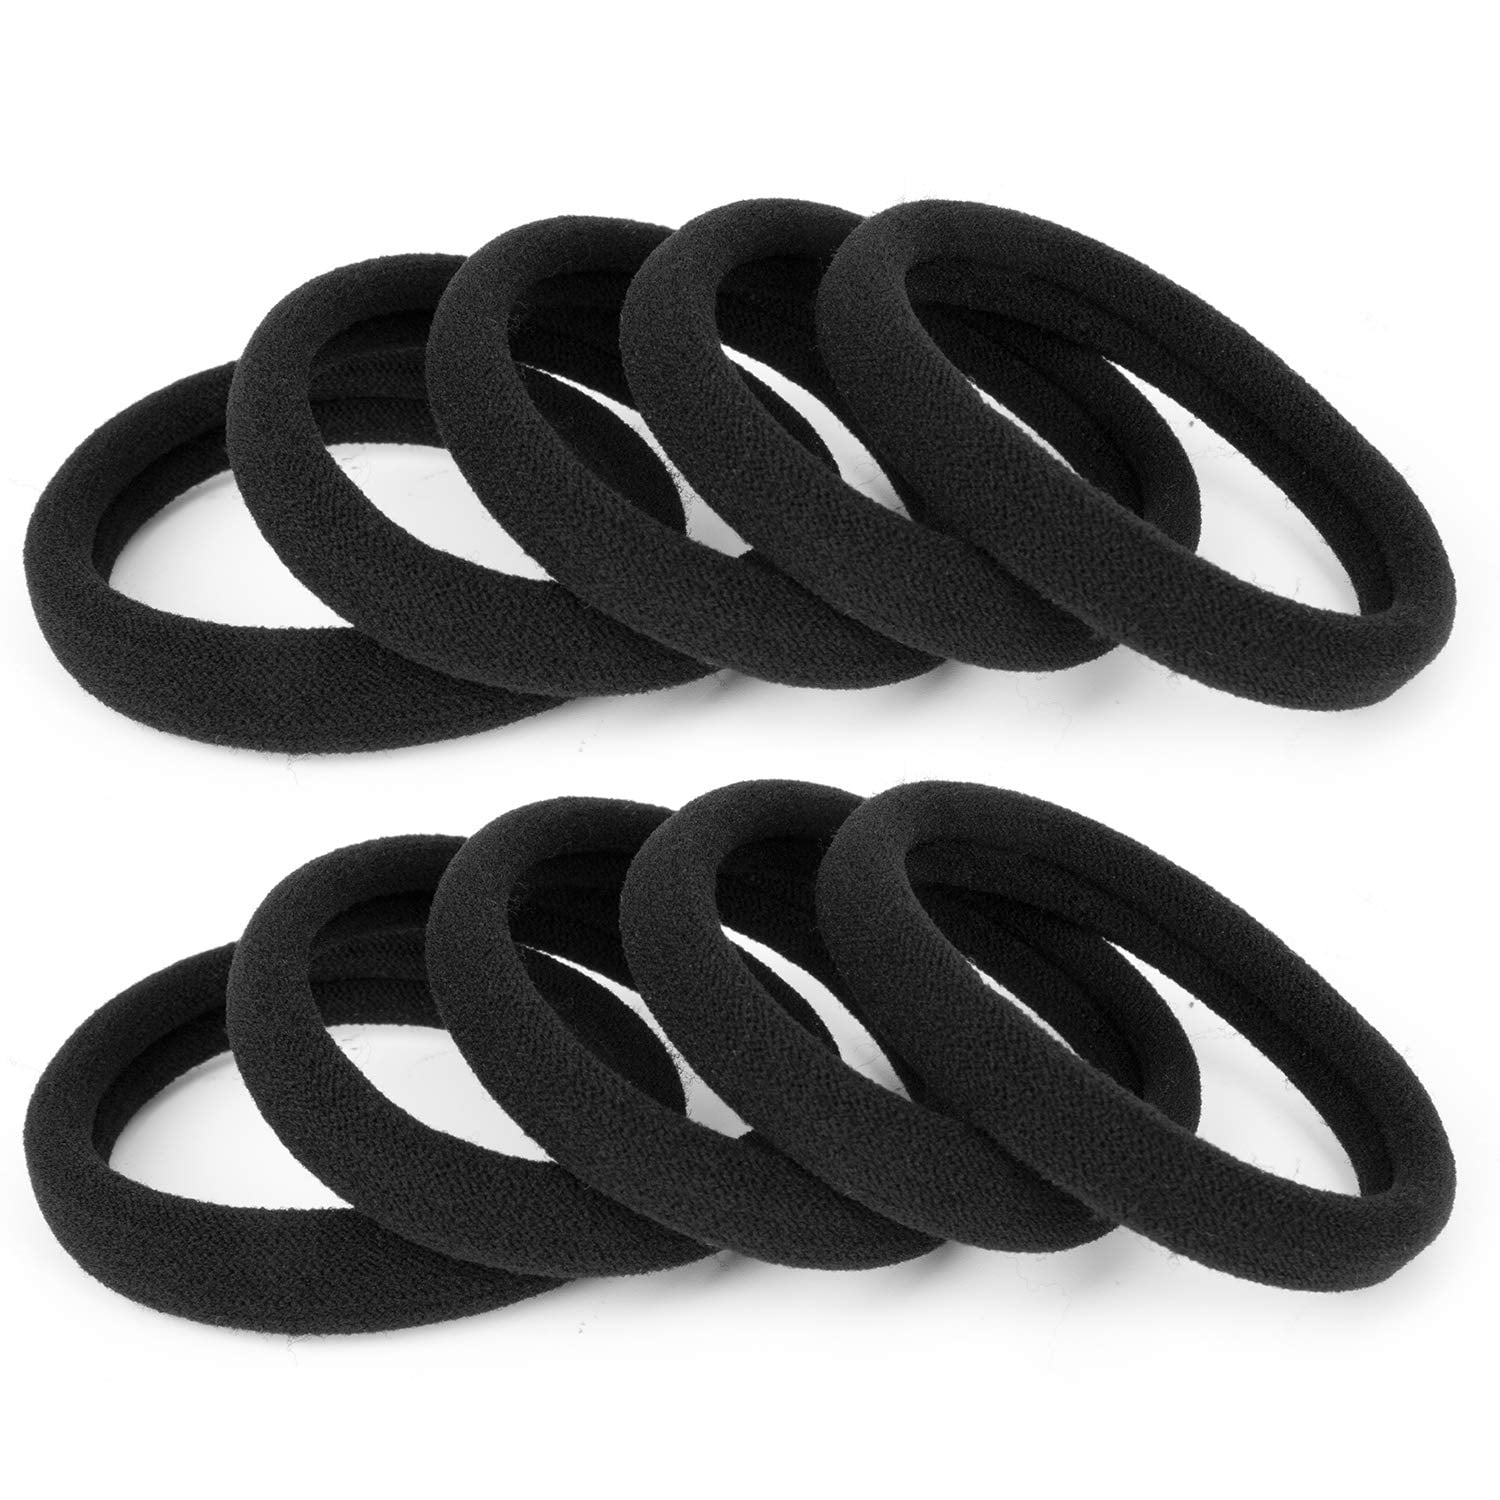 Lots 100PCS Black Elastic Hair Tie Band Rope Ring Ponytail Holder Gift Womens